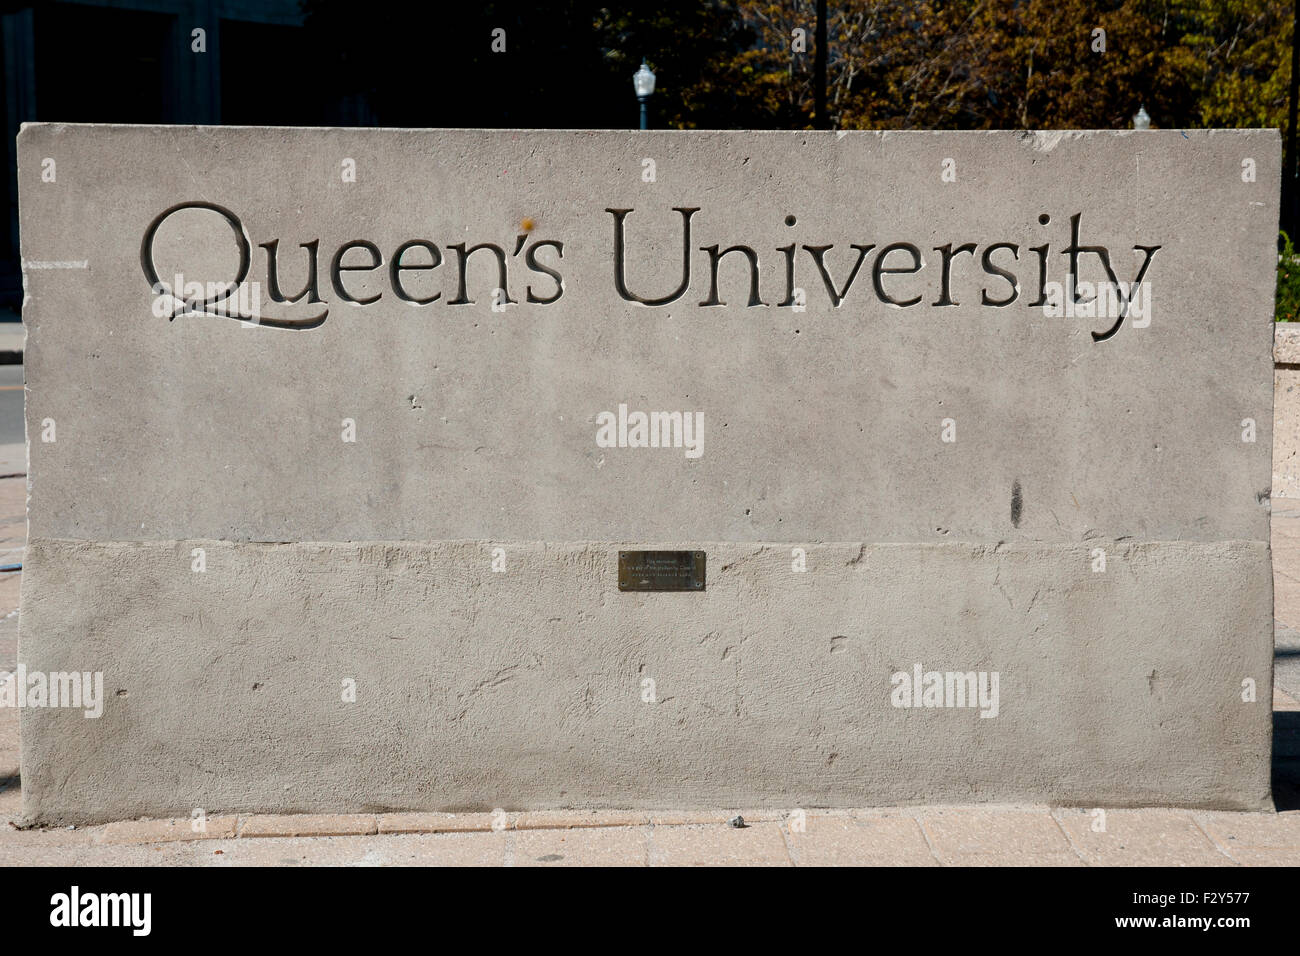 Queen's University Sign - Kingston - Canada Stock Photo